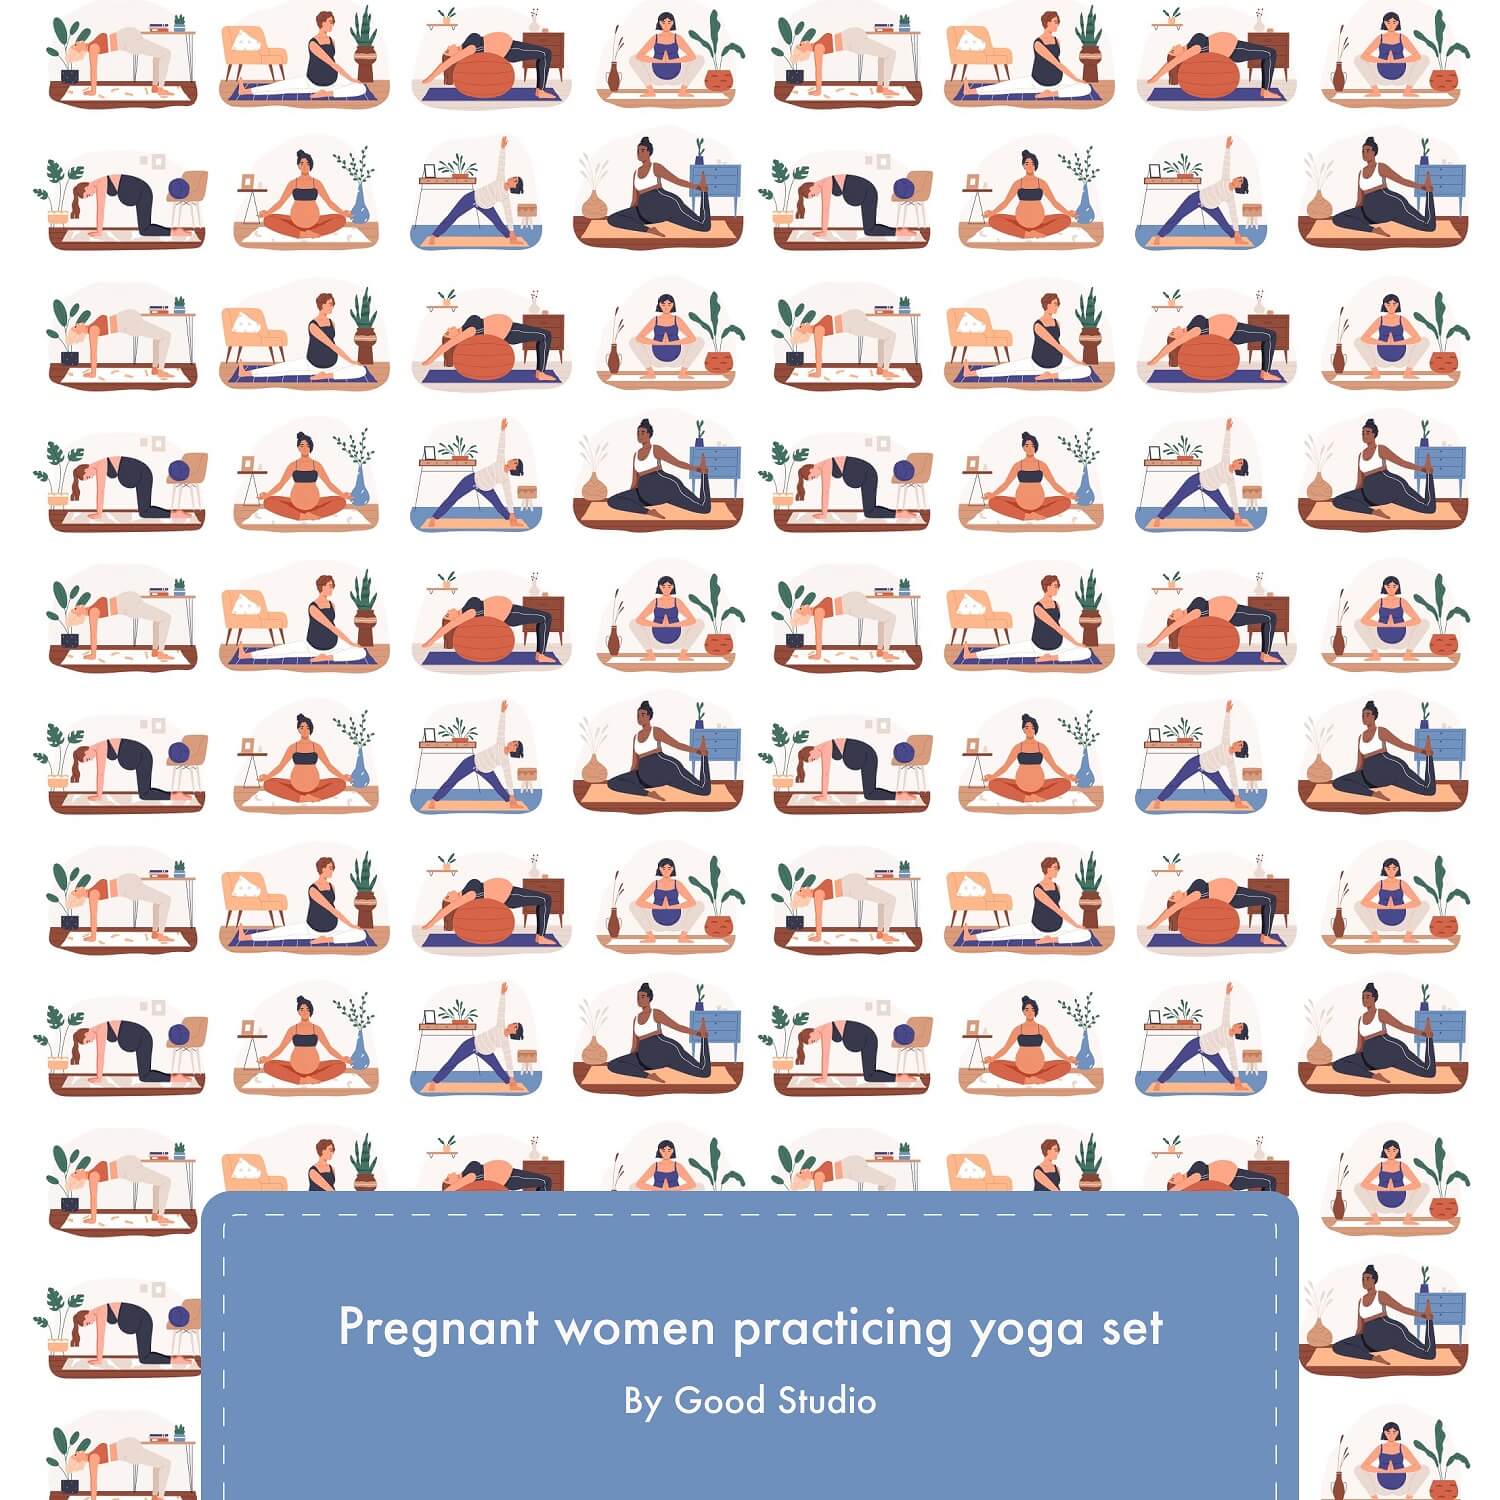 Image of pregnant women doing various yoga exercises.